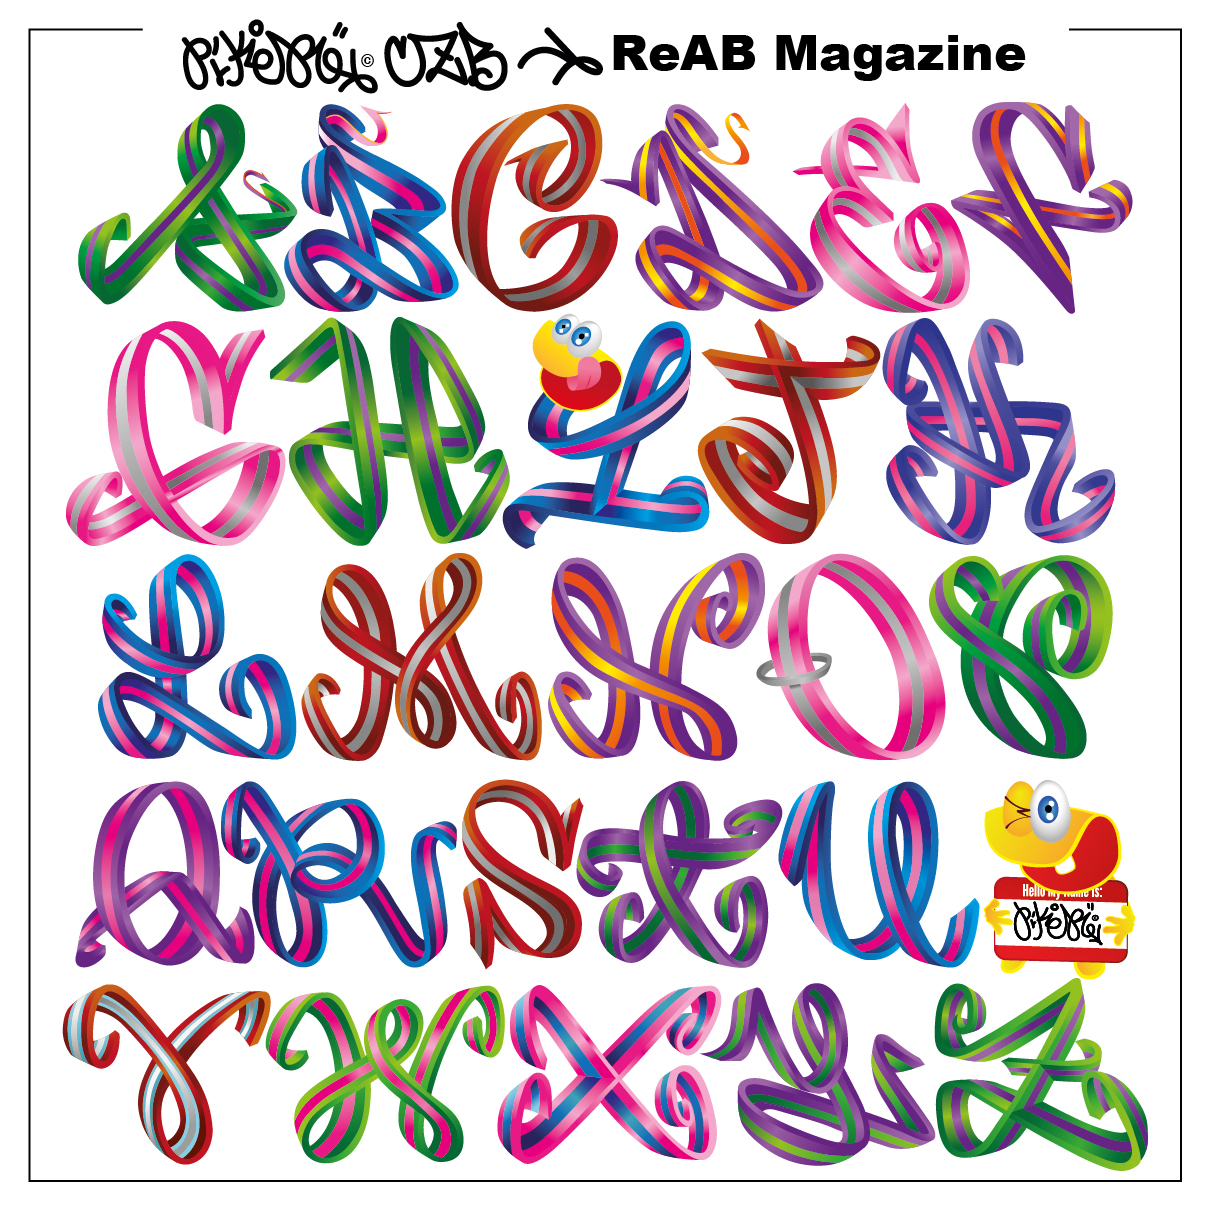 abecedario reab magazine by piker czb